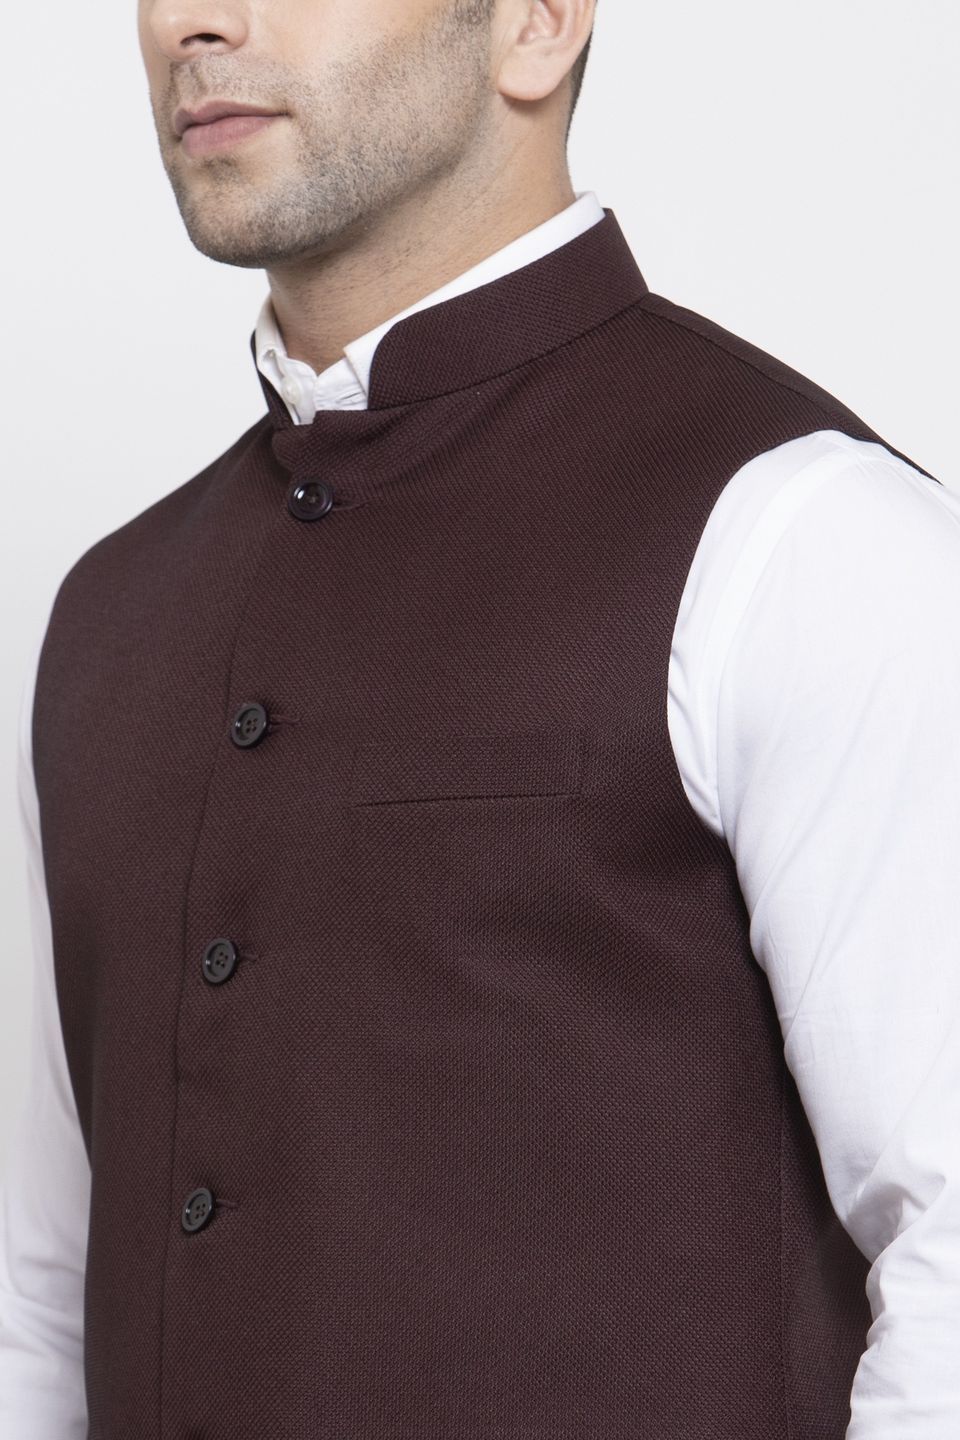 Wintage Men's Poly Cotton Festive and Casual Nehru Jacket Vest Waistcoat : Dark Brown